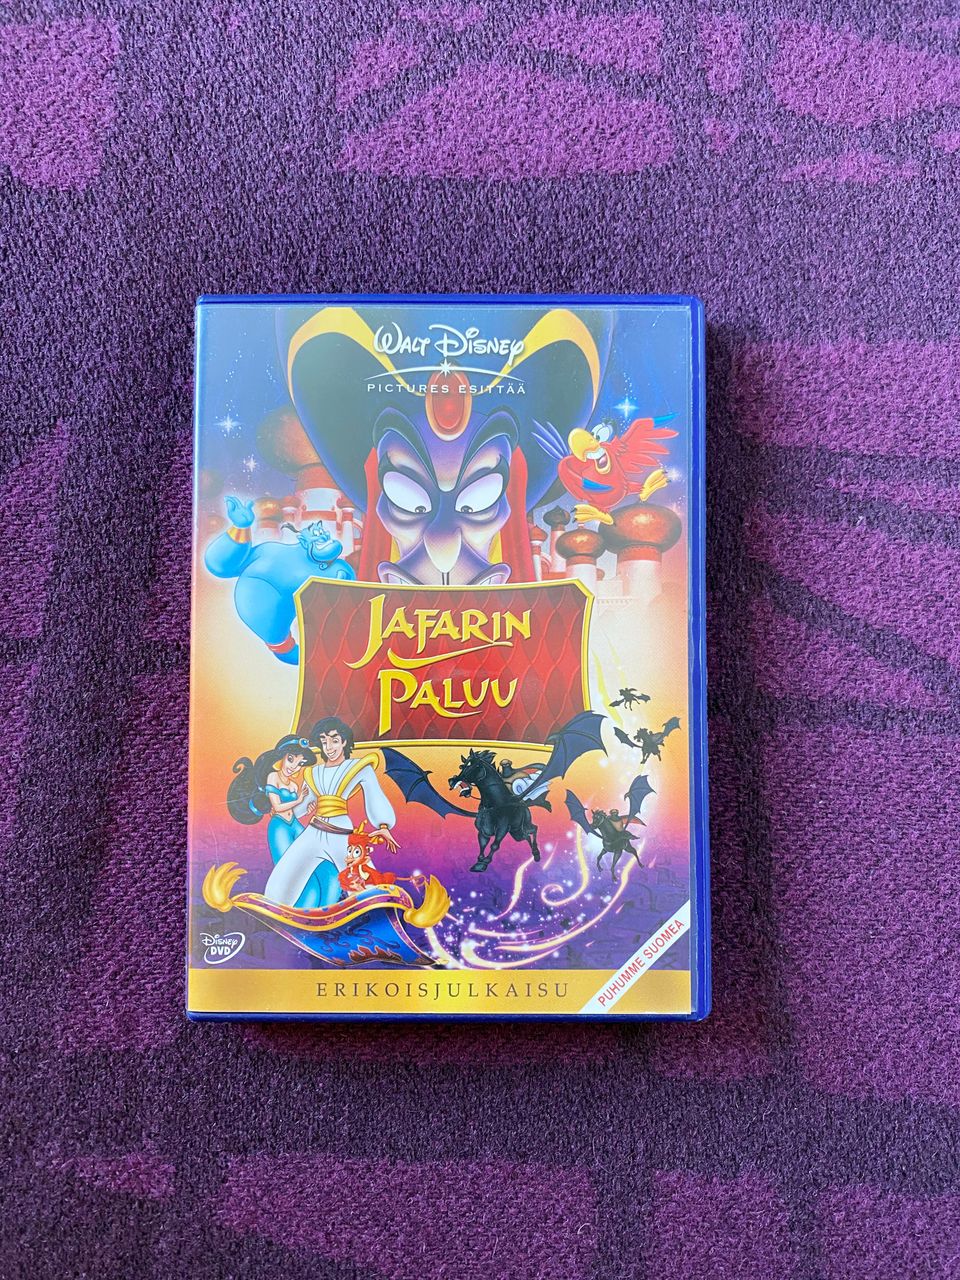 Jafarin paluu DVD Disney Suomipuhe